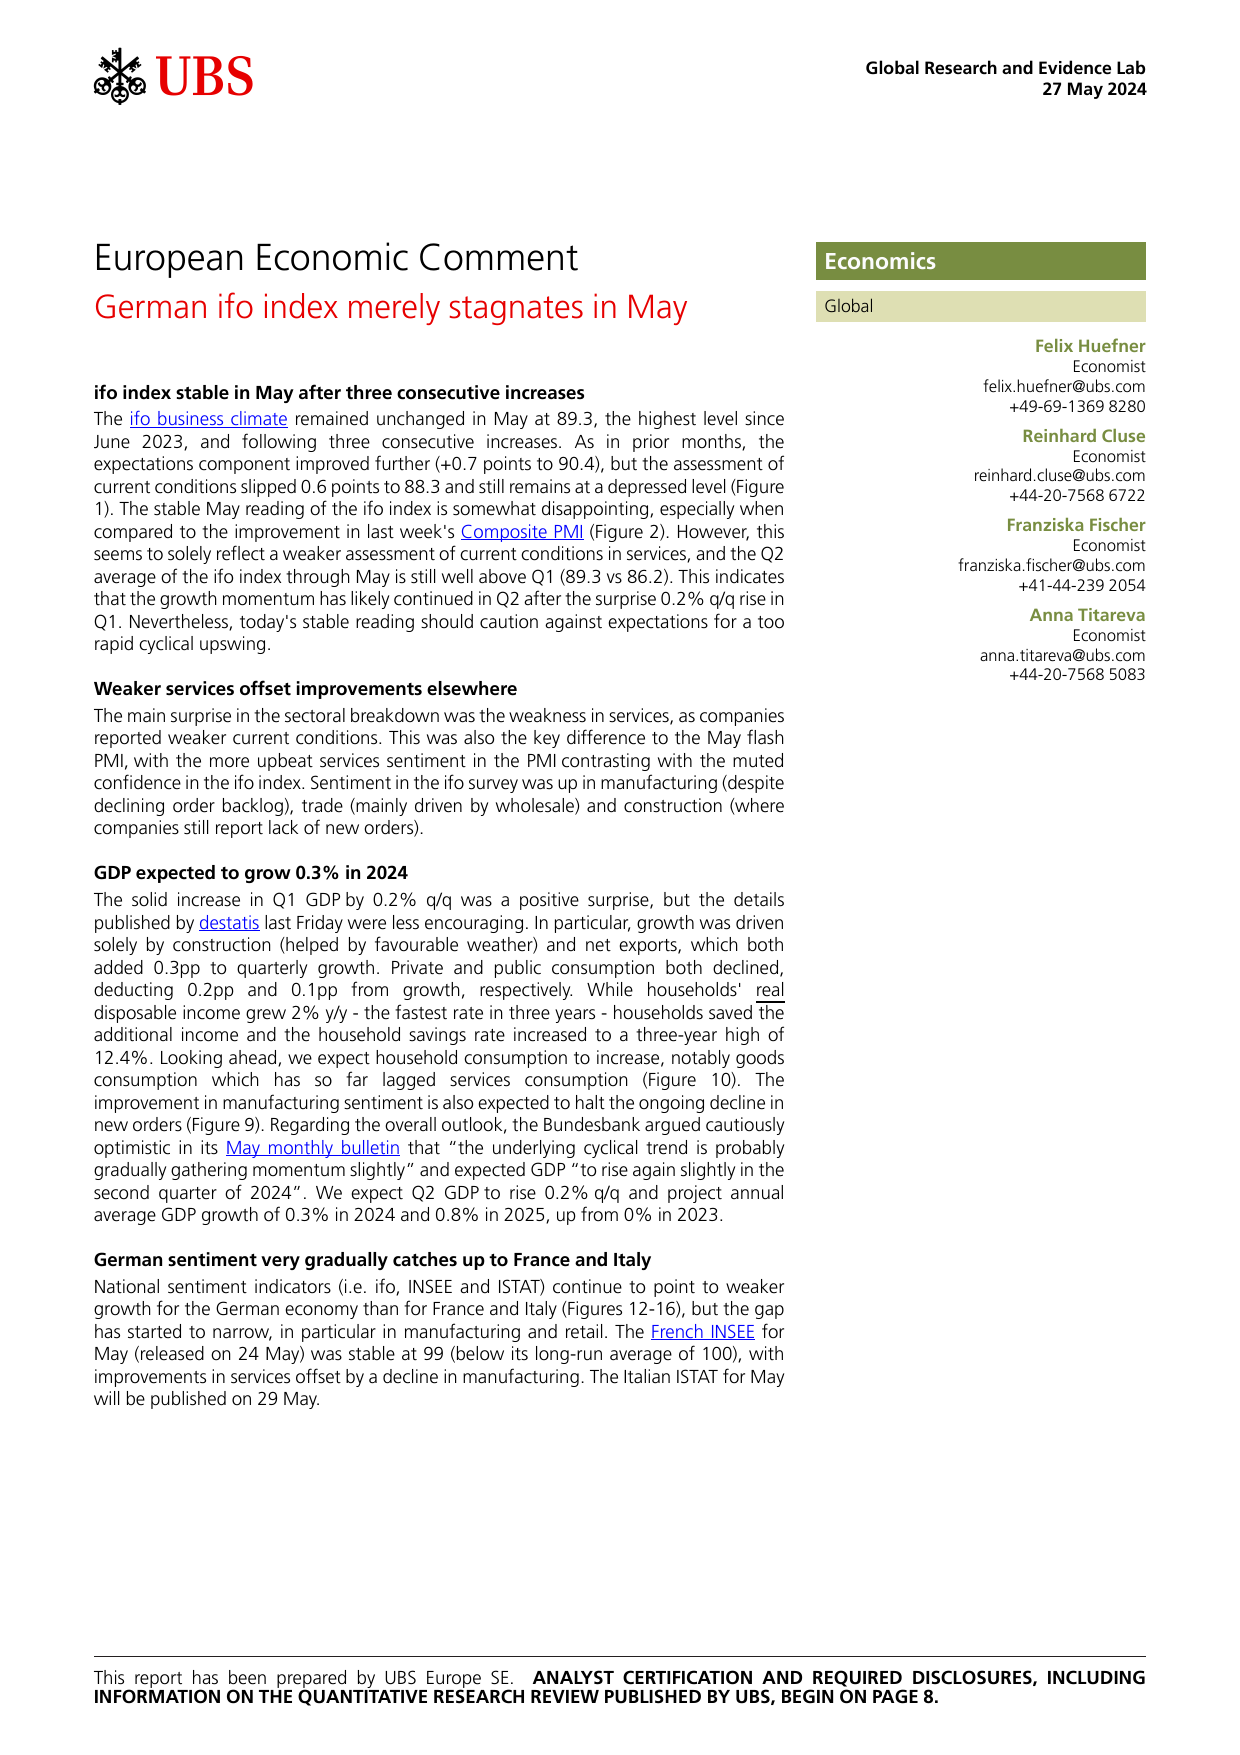 UBS Economics-European Economic Comment _German ifo index merely stagnates...-108408916.pdf